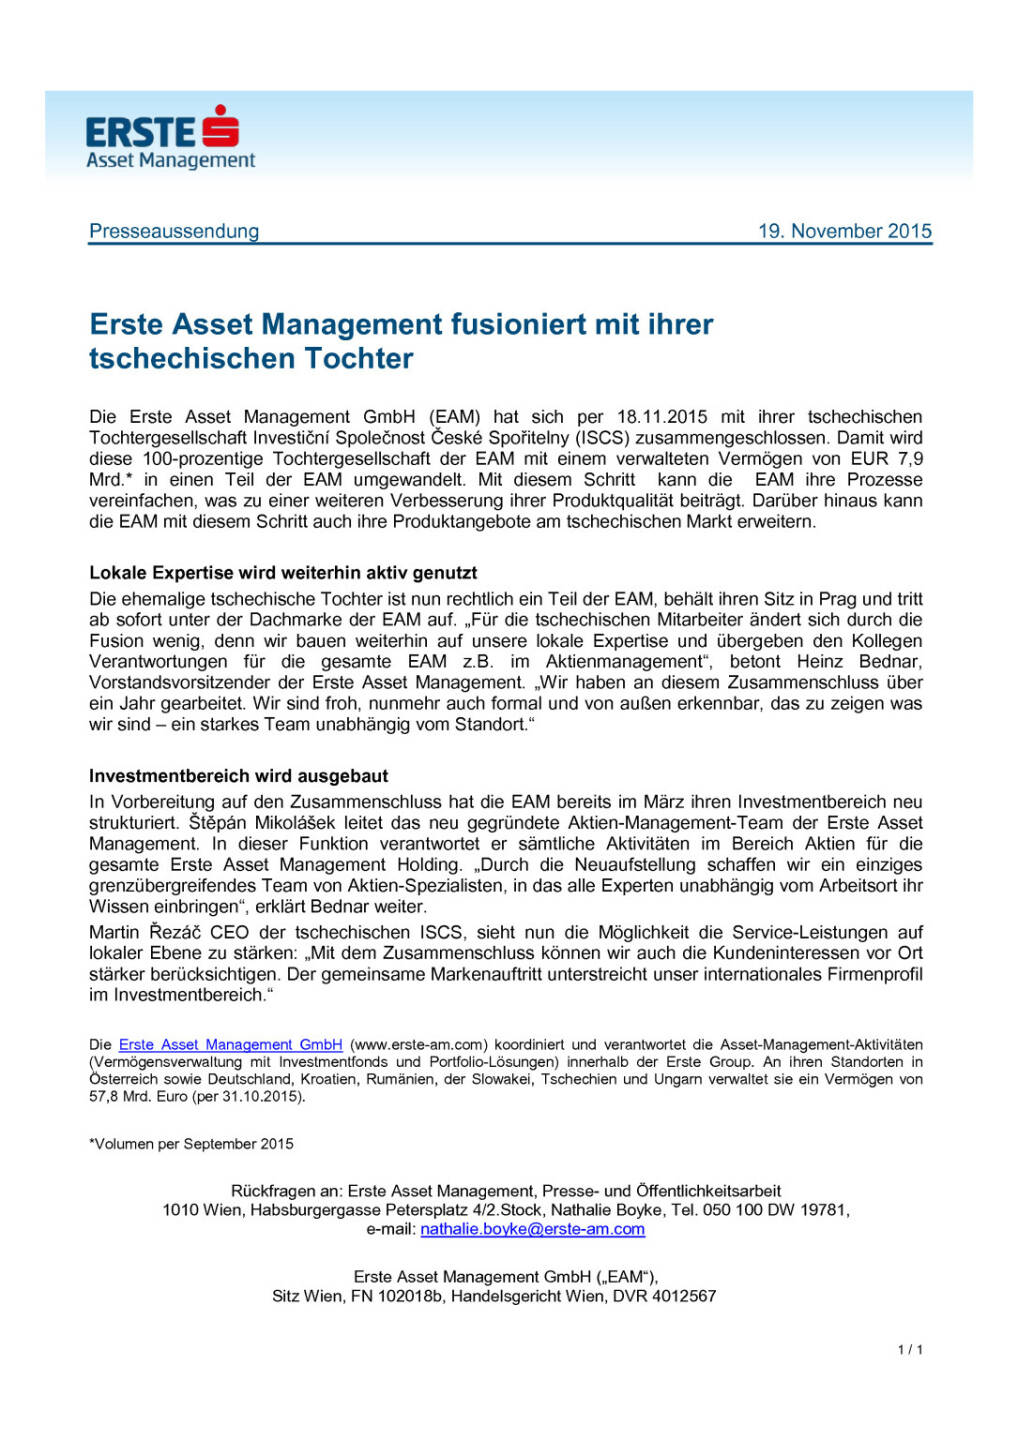 Erste Asset Management fusioniert mit tschechischer Tochter, Seite 1/1, komplettes Dokument unter http://boerse-social.com/static/uploads/file_485_erste_asset_management_fusioniert_mit_tschechischer_tochter.pdf